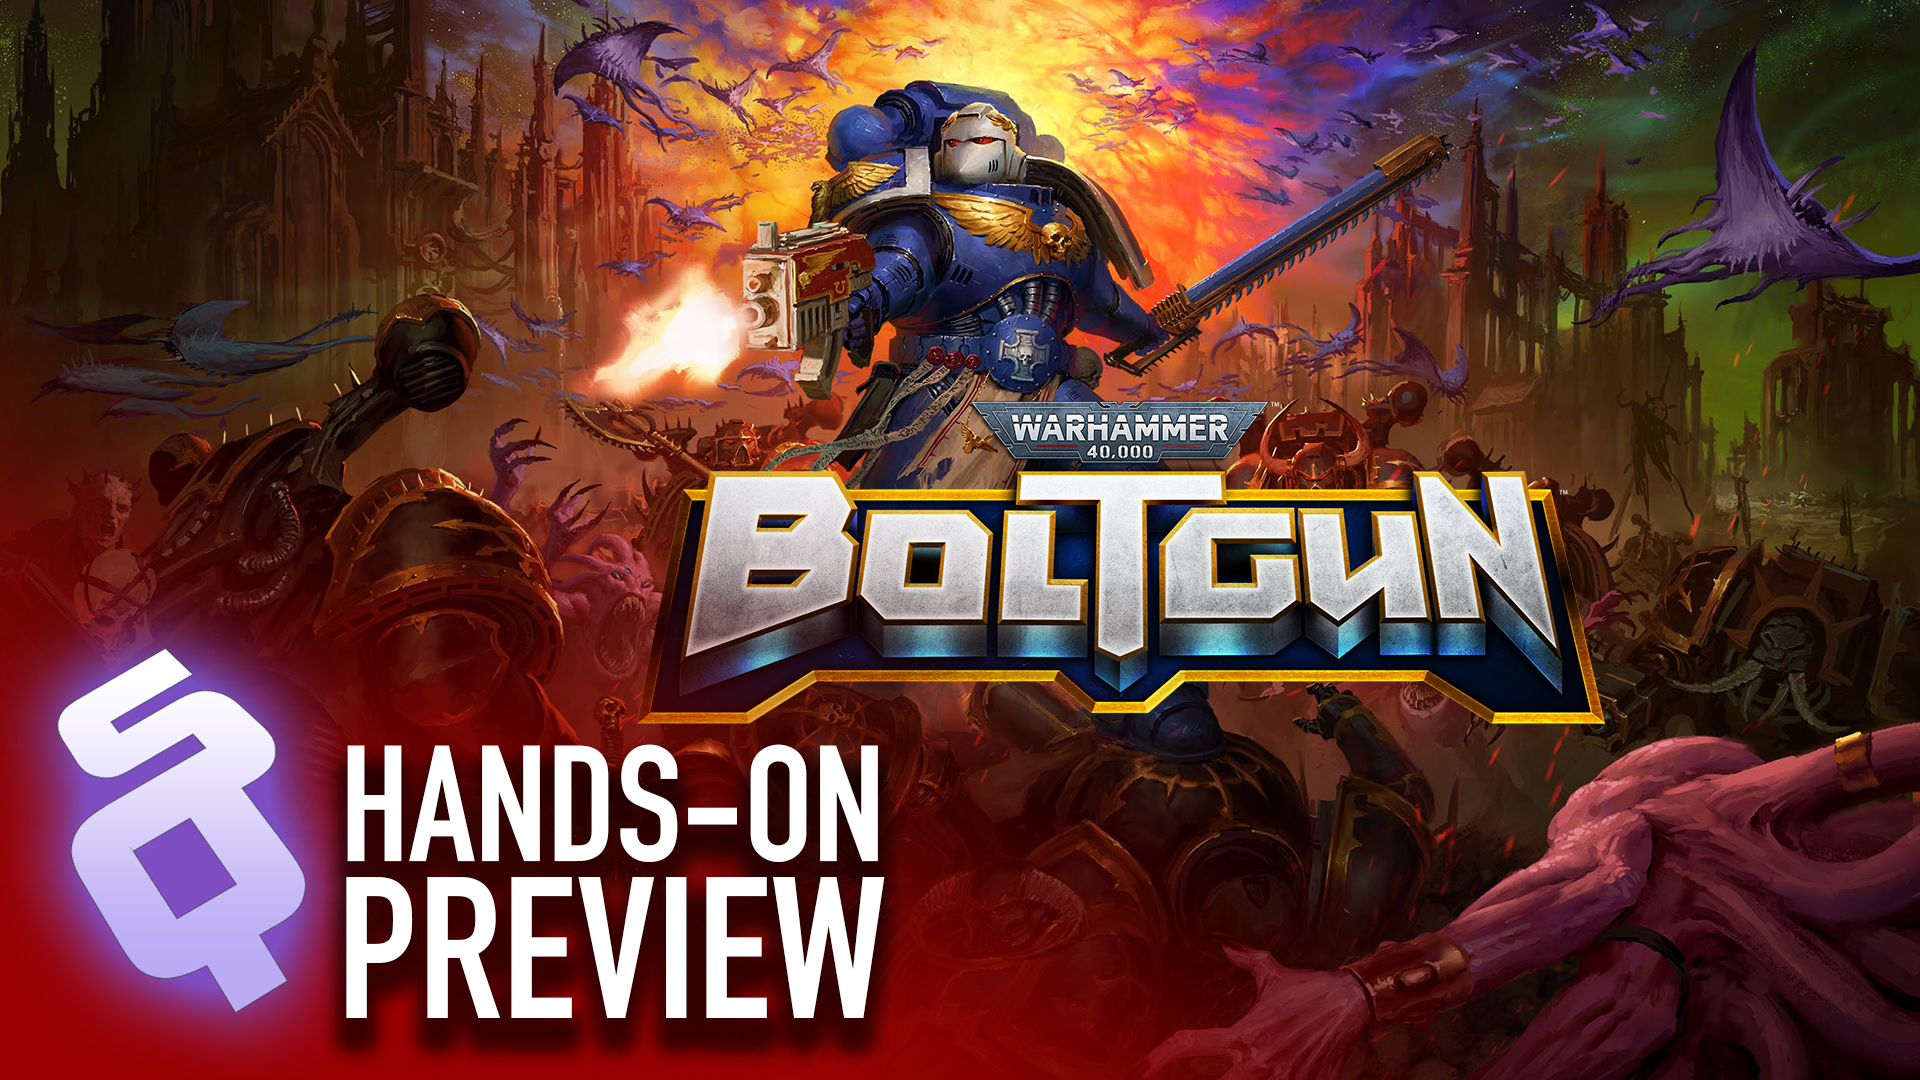 Warhammer 40,000 Boltgun hands-on preview